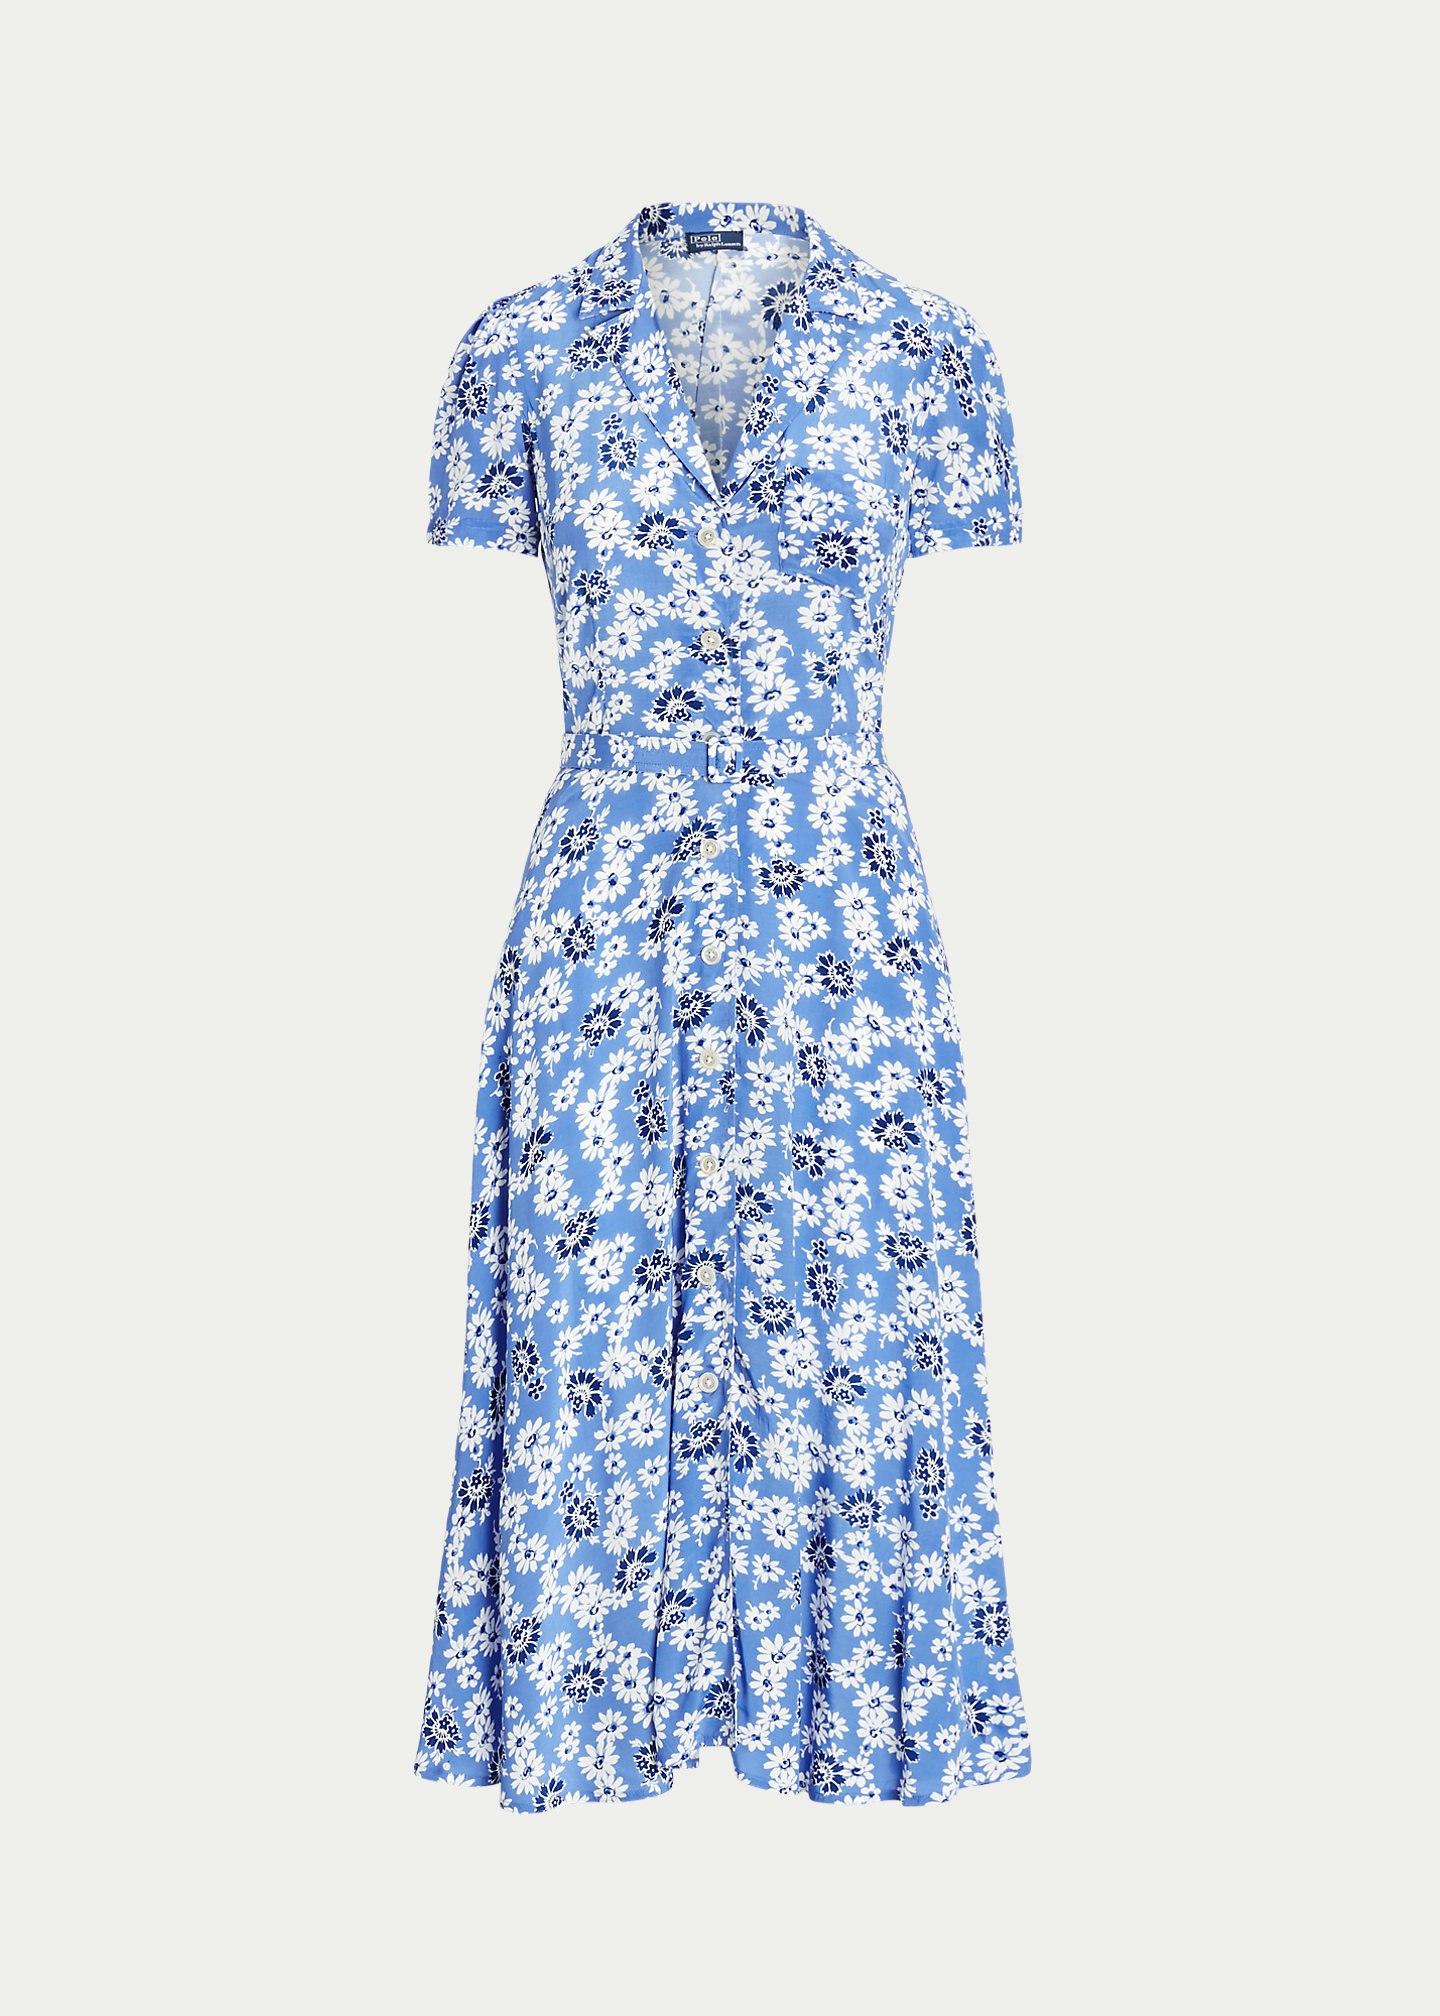 Polo Ralph Lauren, Floral Crepe Short-Sleeve Dress